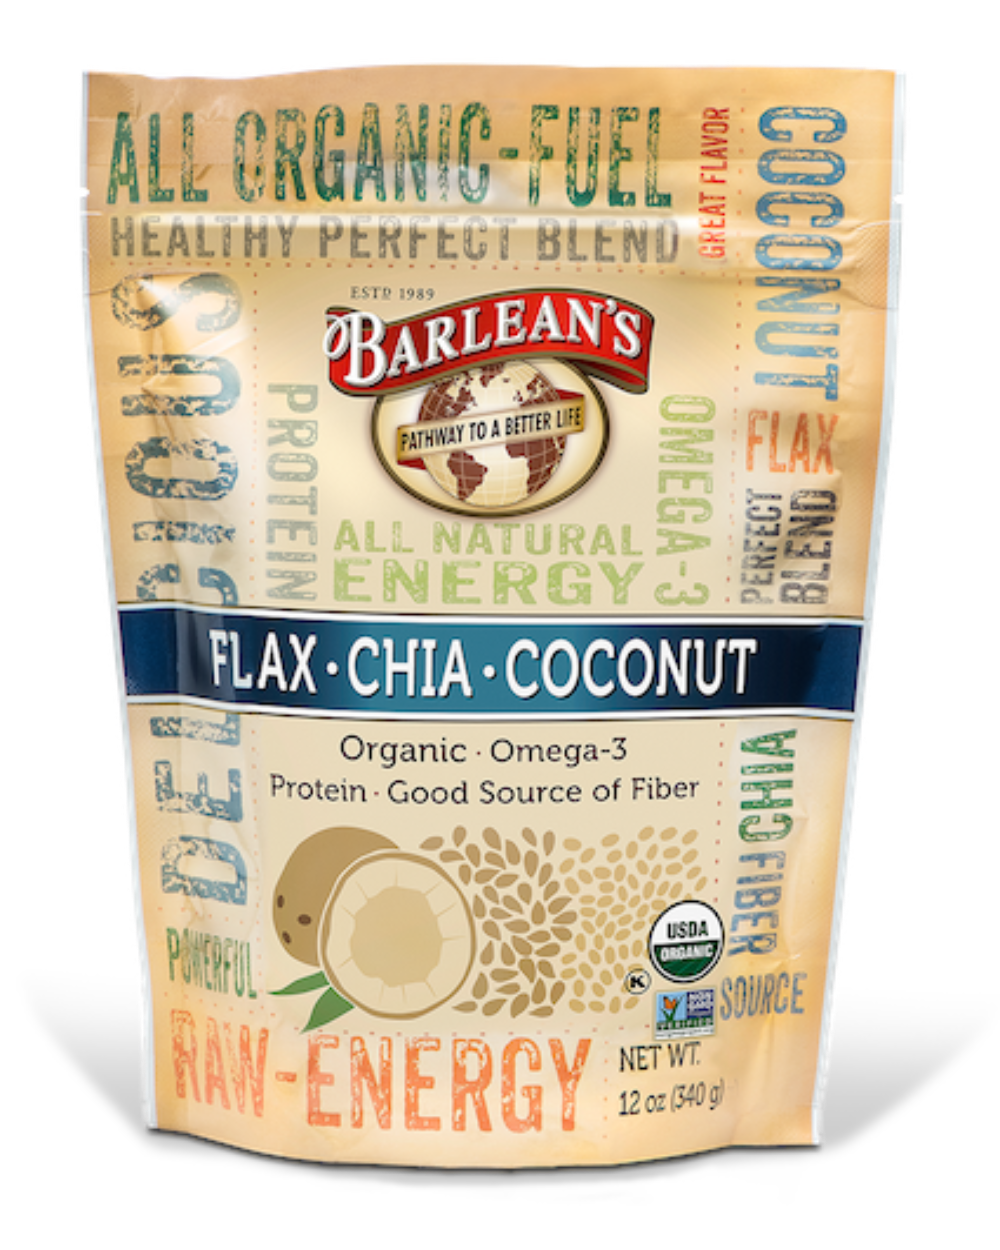 Barleans Org. flax/chia/coconut